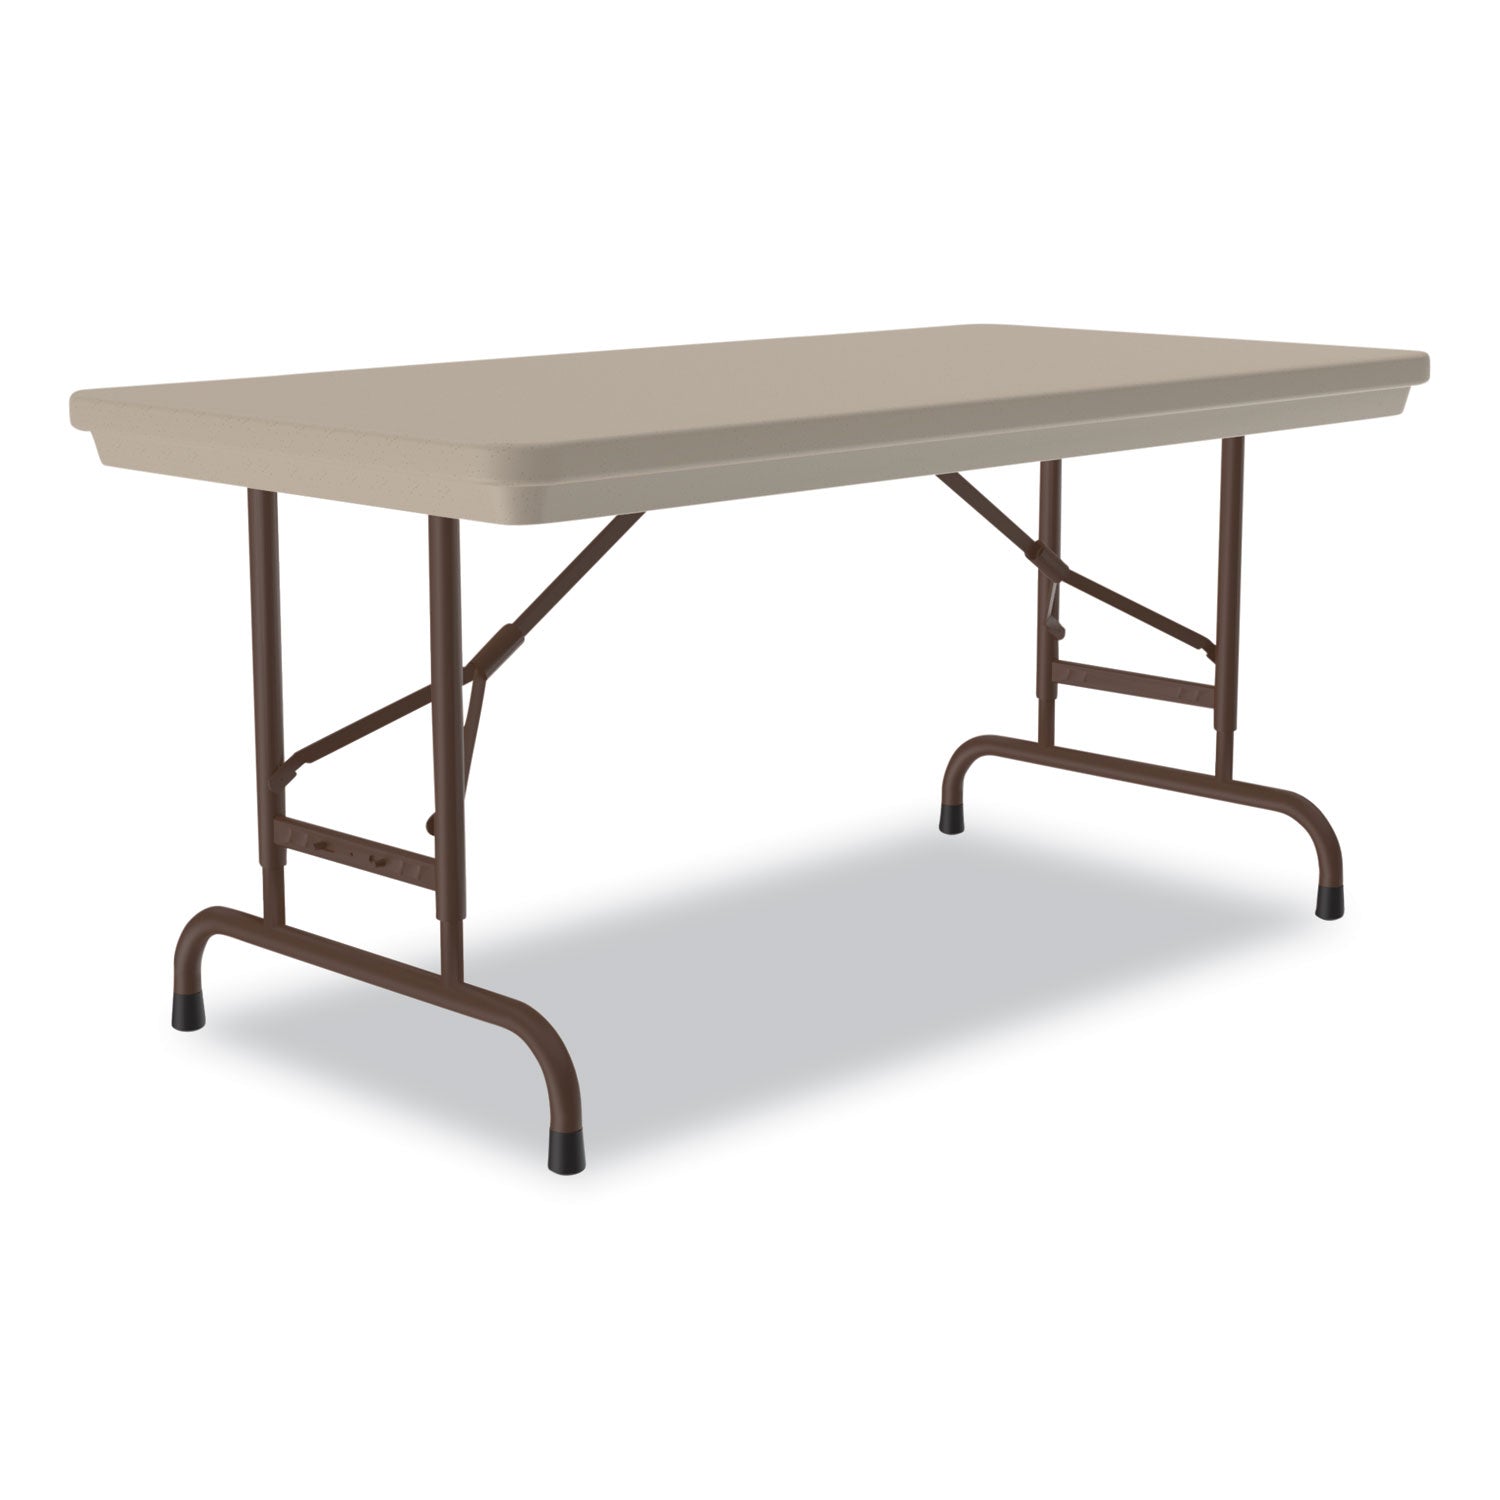 adjustable-folding-table-rectangular-48-x-24-x-22-to-32-mocha-top-brown-legs-pallet-ships-in-4-6-business-days_crlra2448244p - 2